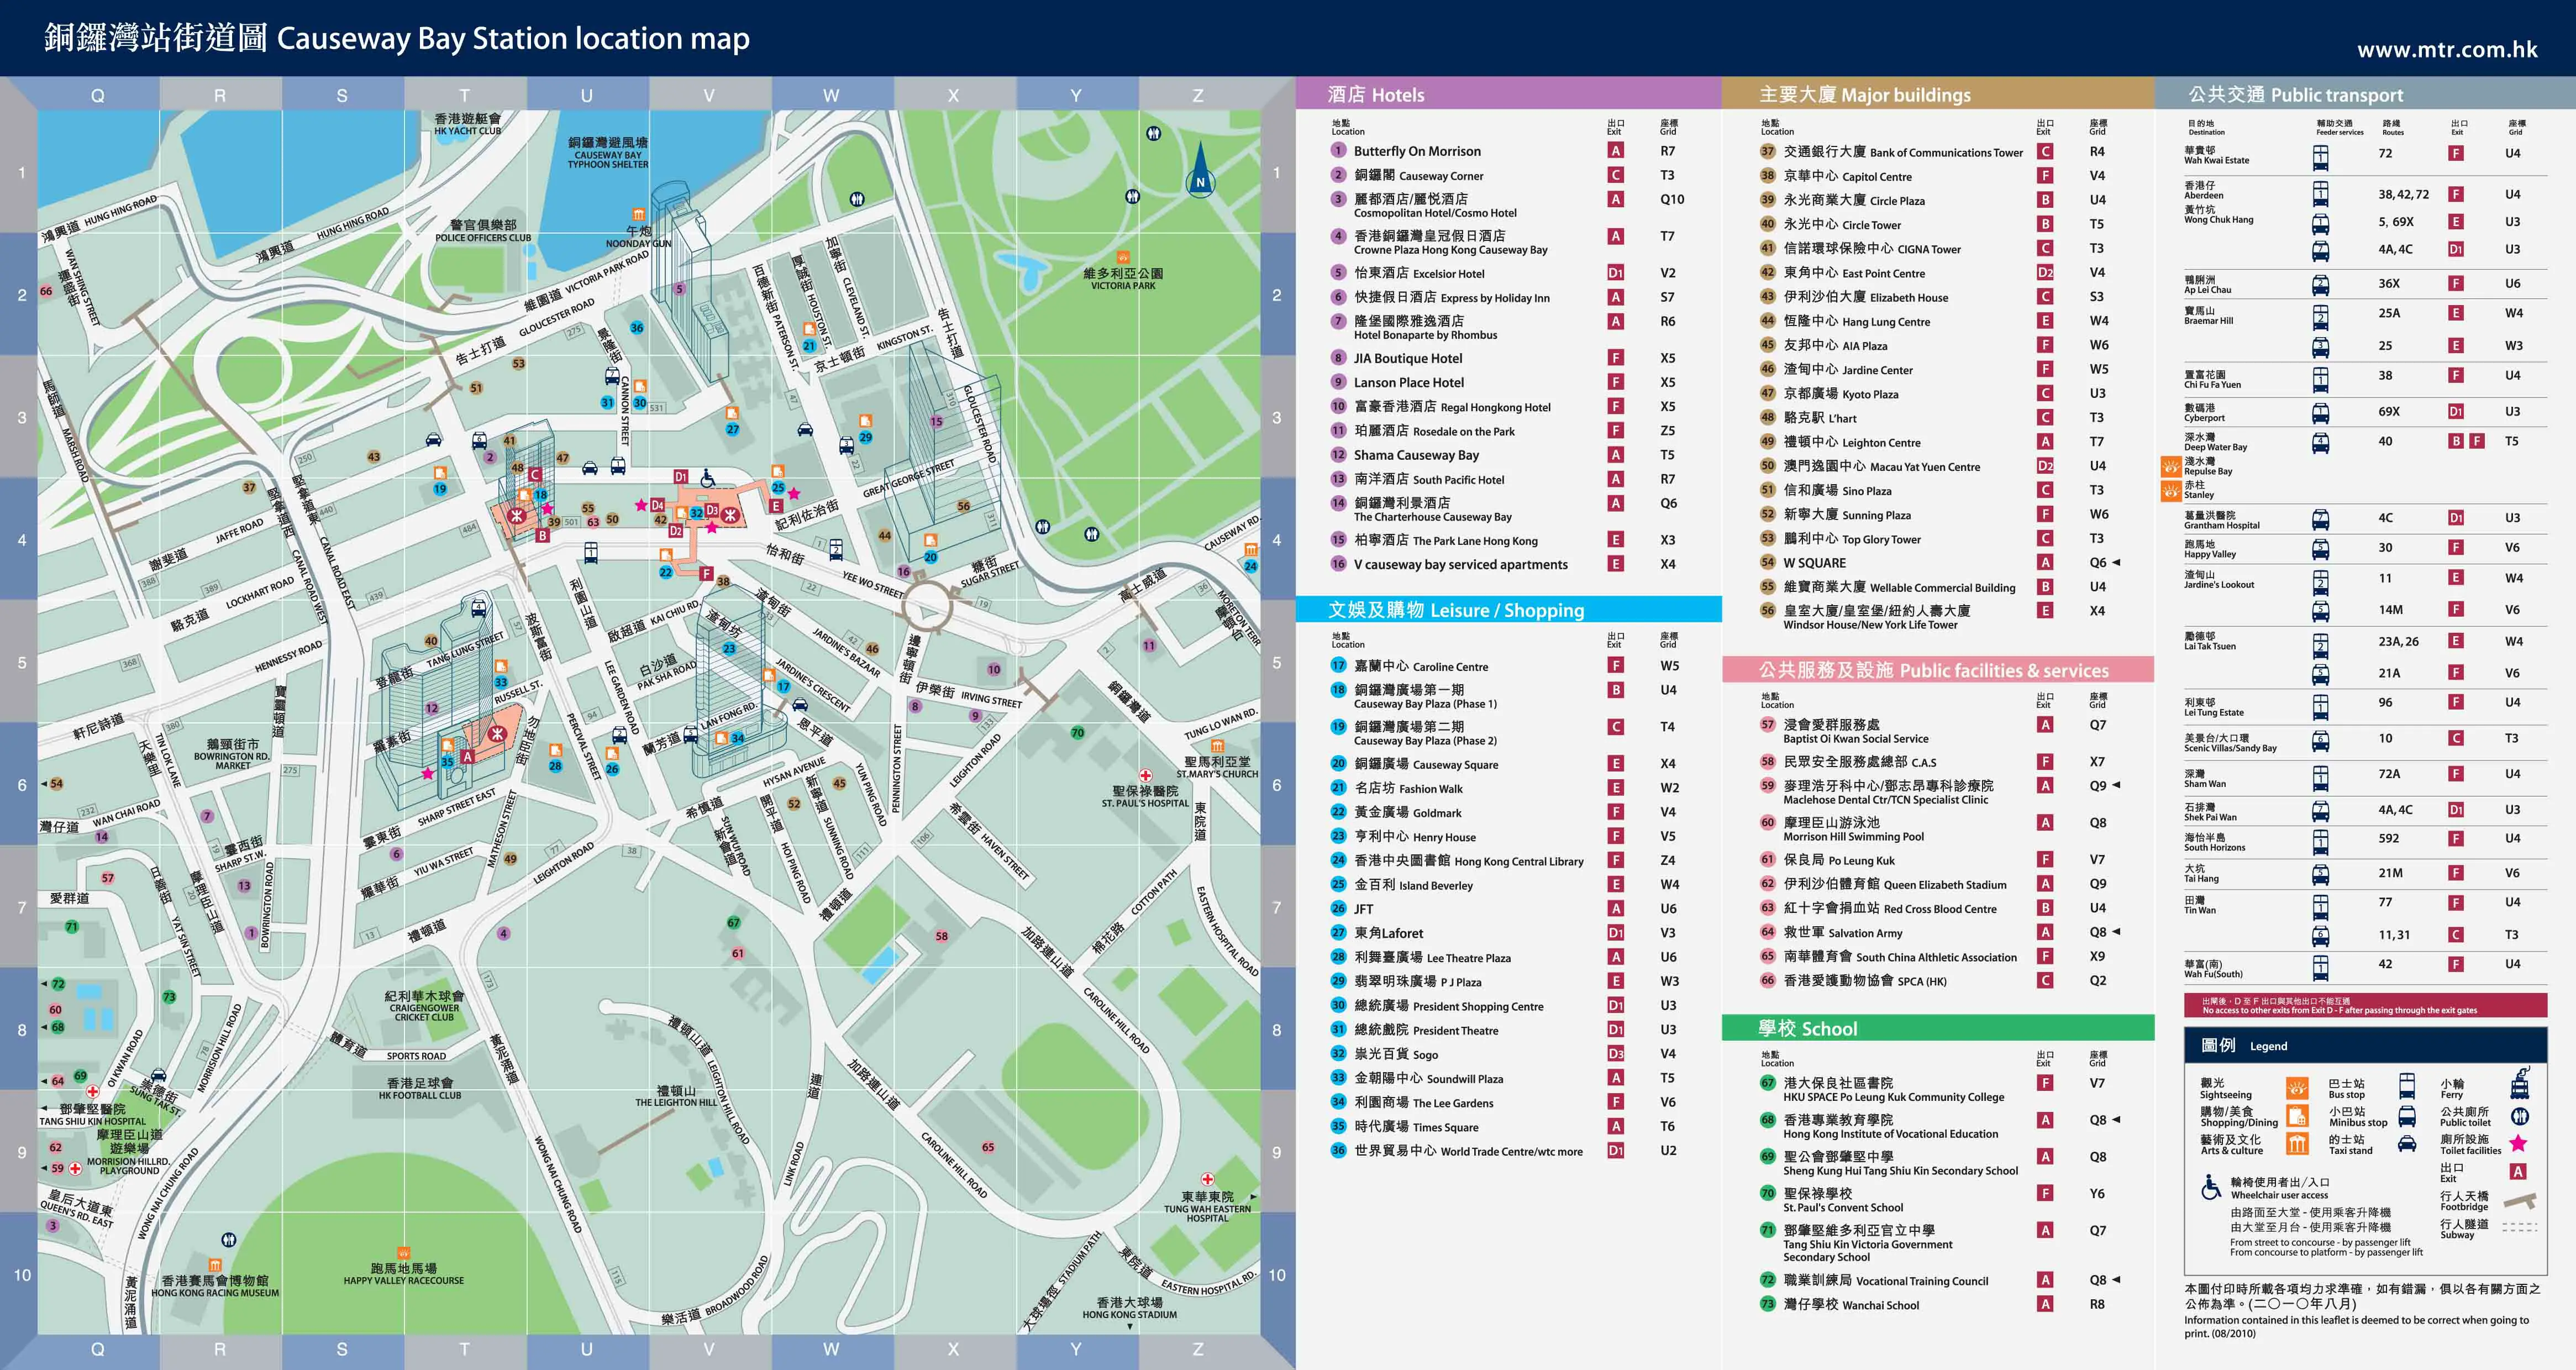 Hong Kong: Causeway Bay MTR station area map 2012-2013